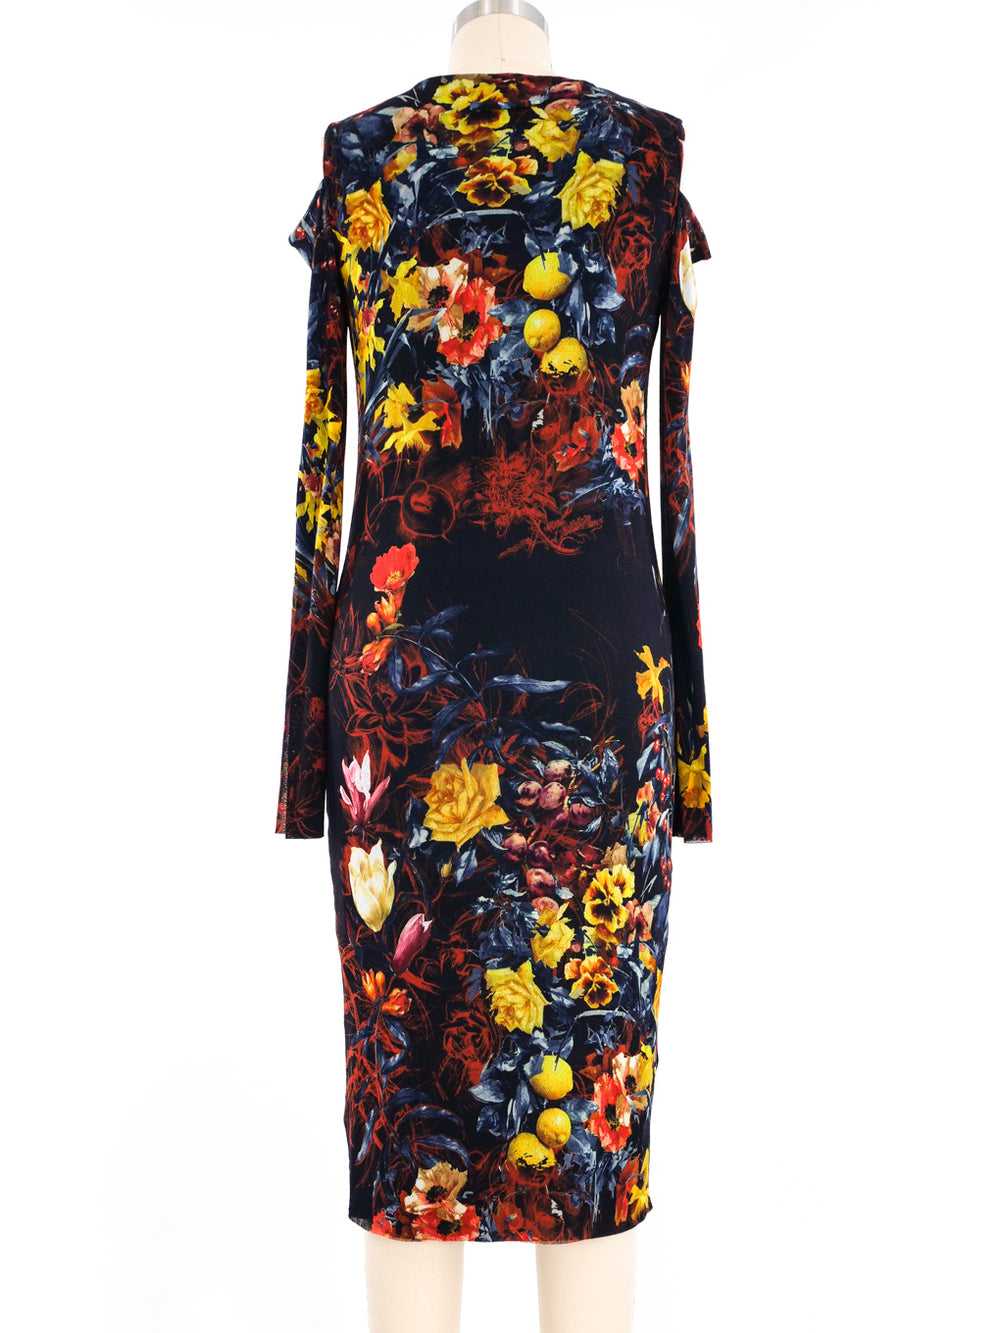 Jean Paul Gaultier Rose Printed Mesh Dress - image 4